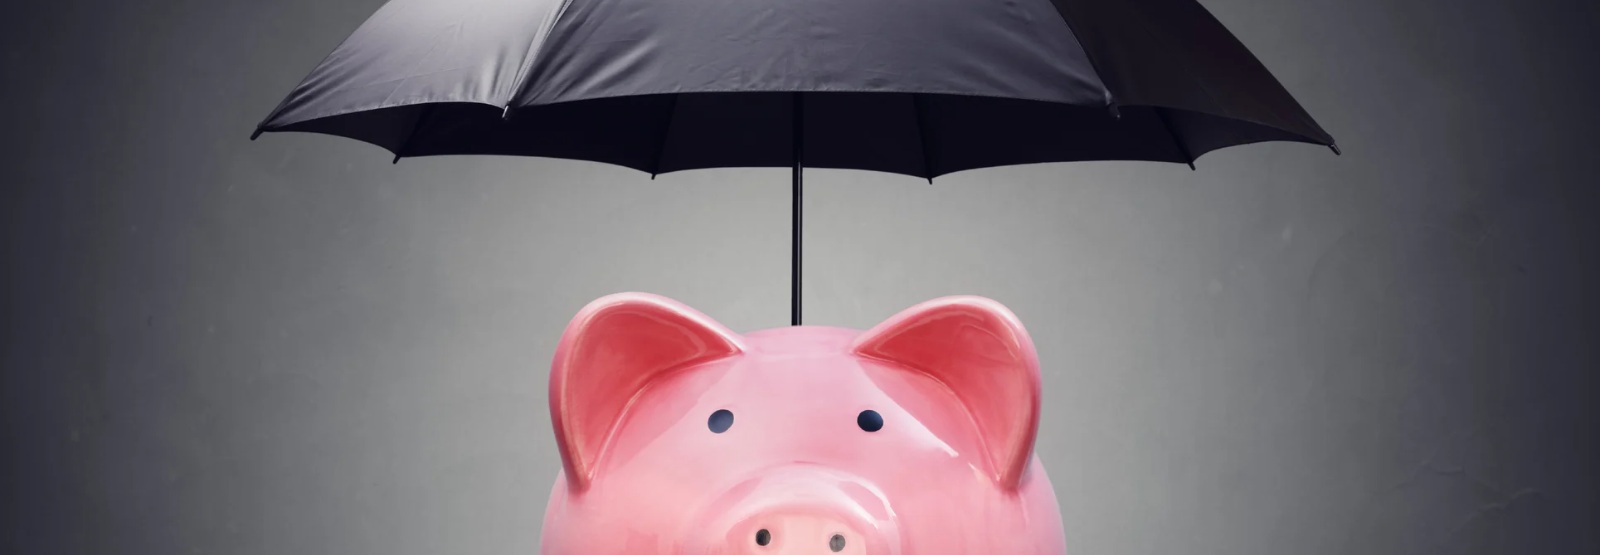 a pink piggy bank under a black umbrella